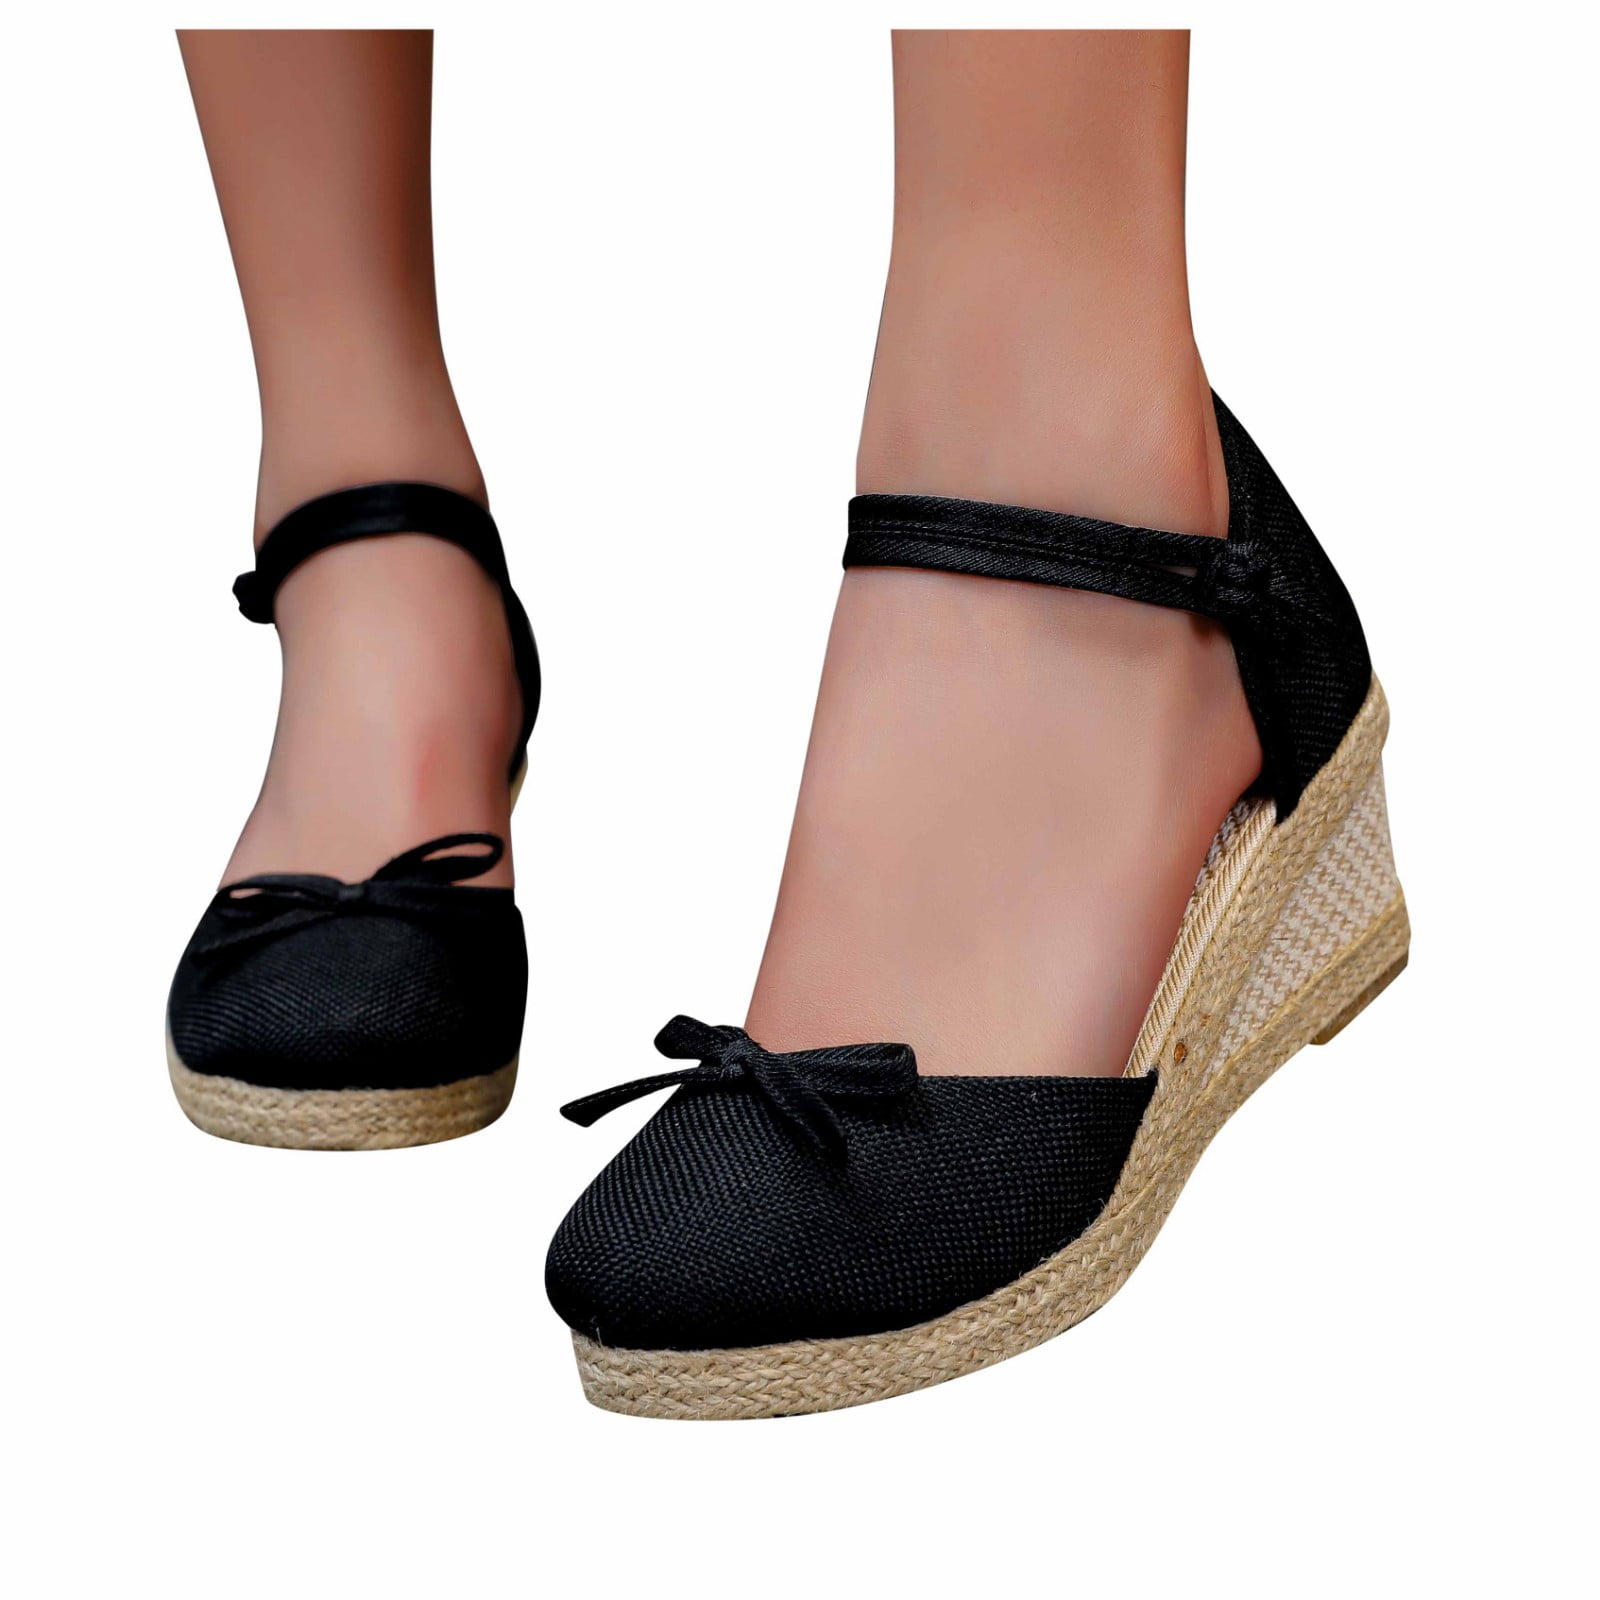 Qonetic Women's Closed Toe Platform Sandals Summer Buckle Ankle Strap Espadrilles Wedge Sandals 